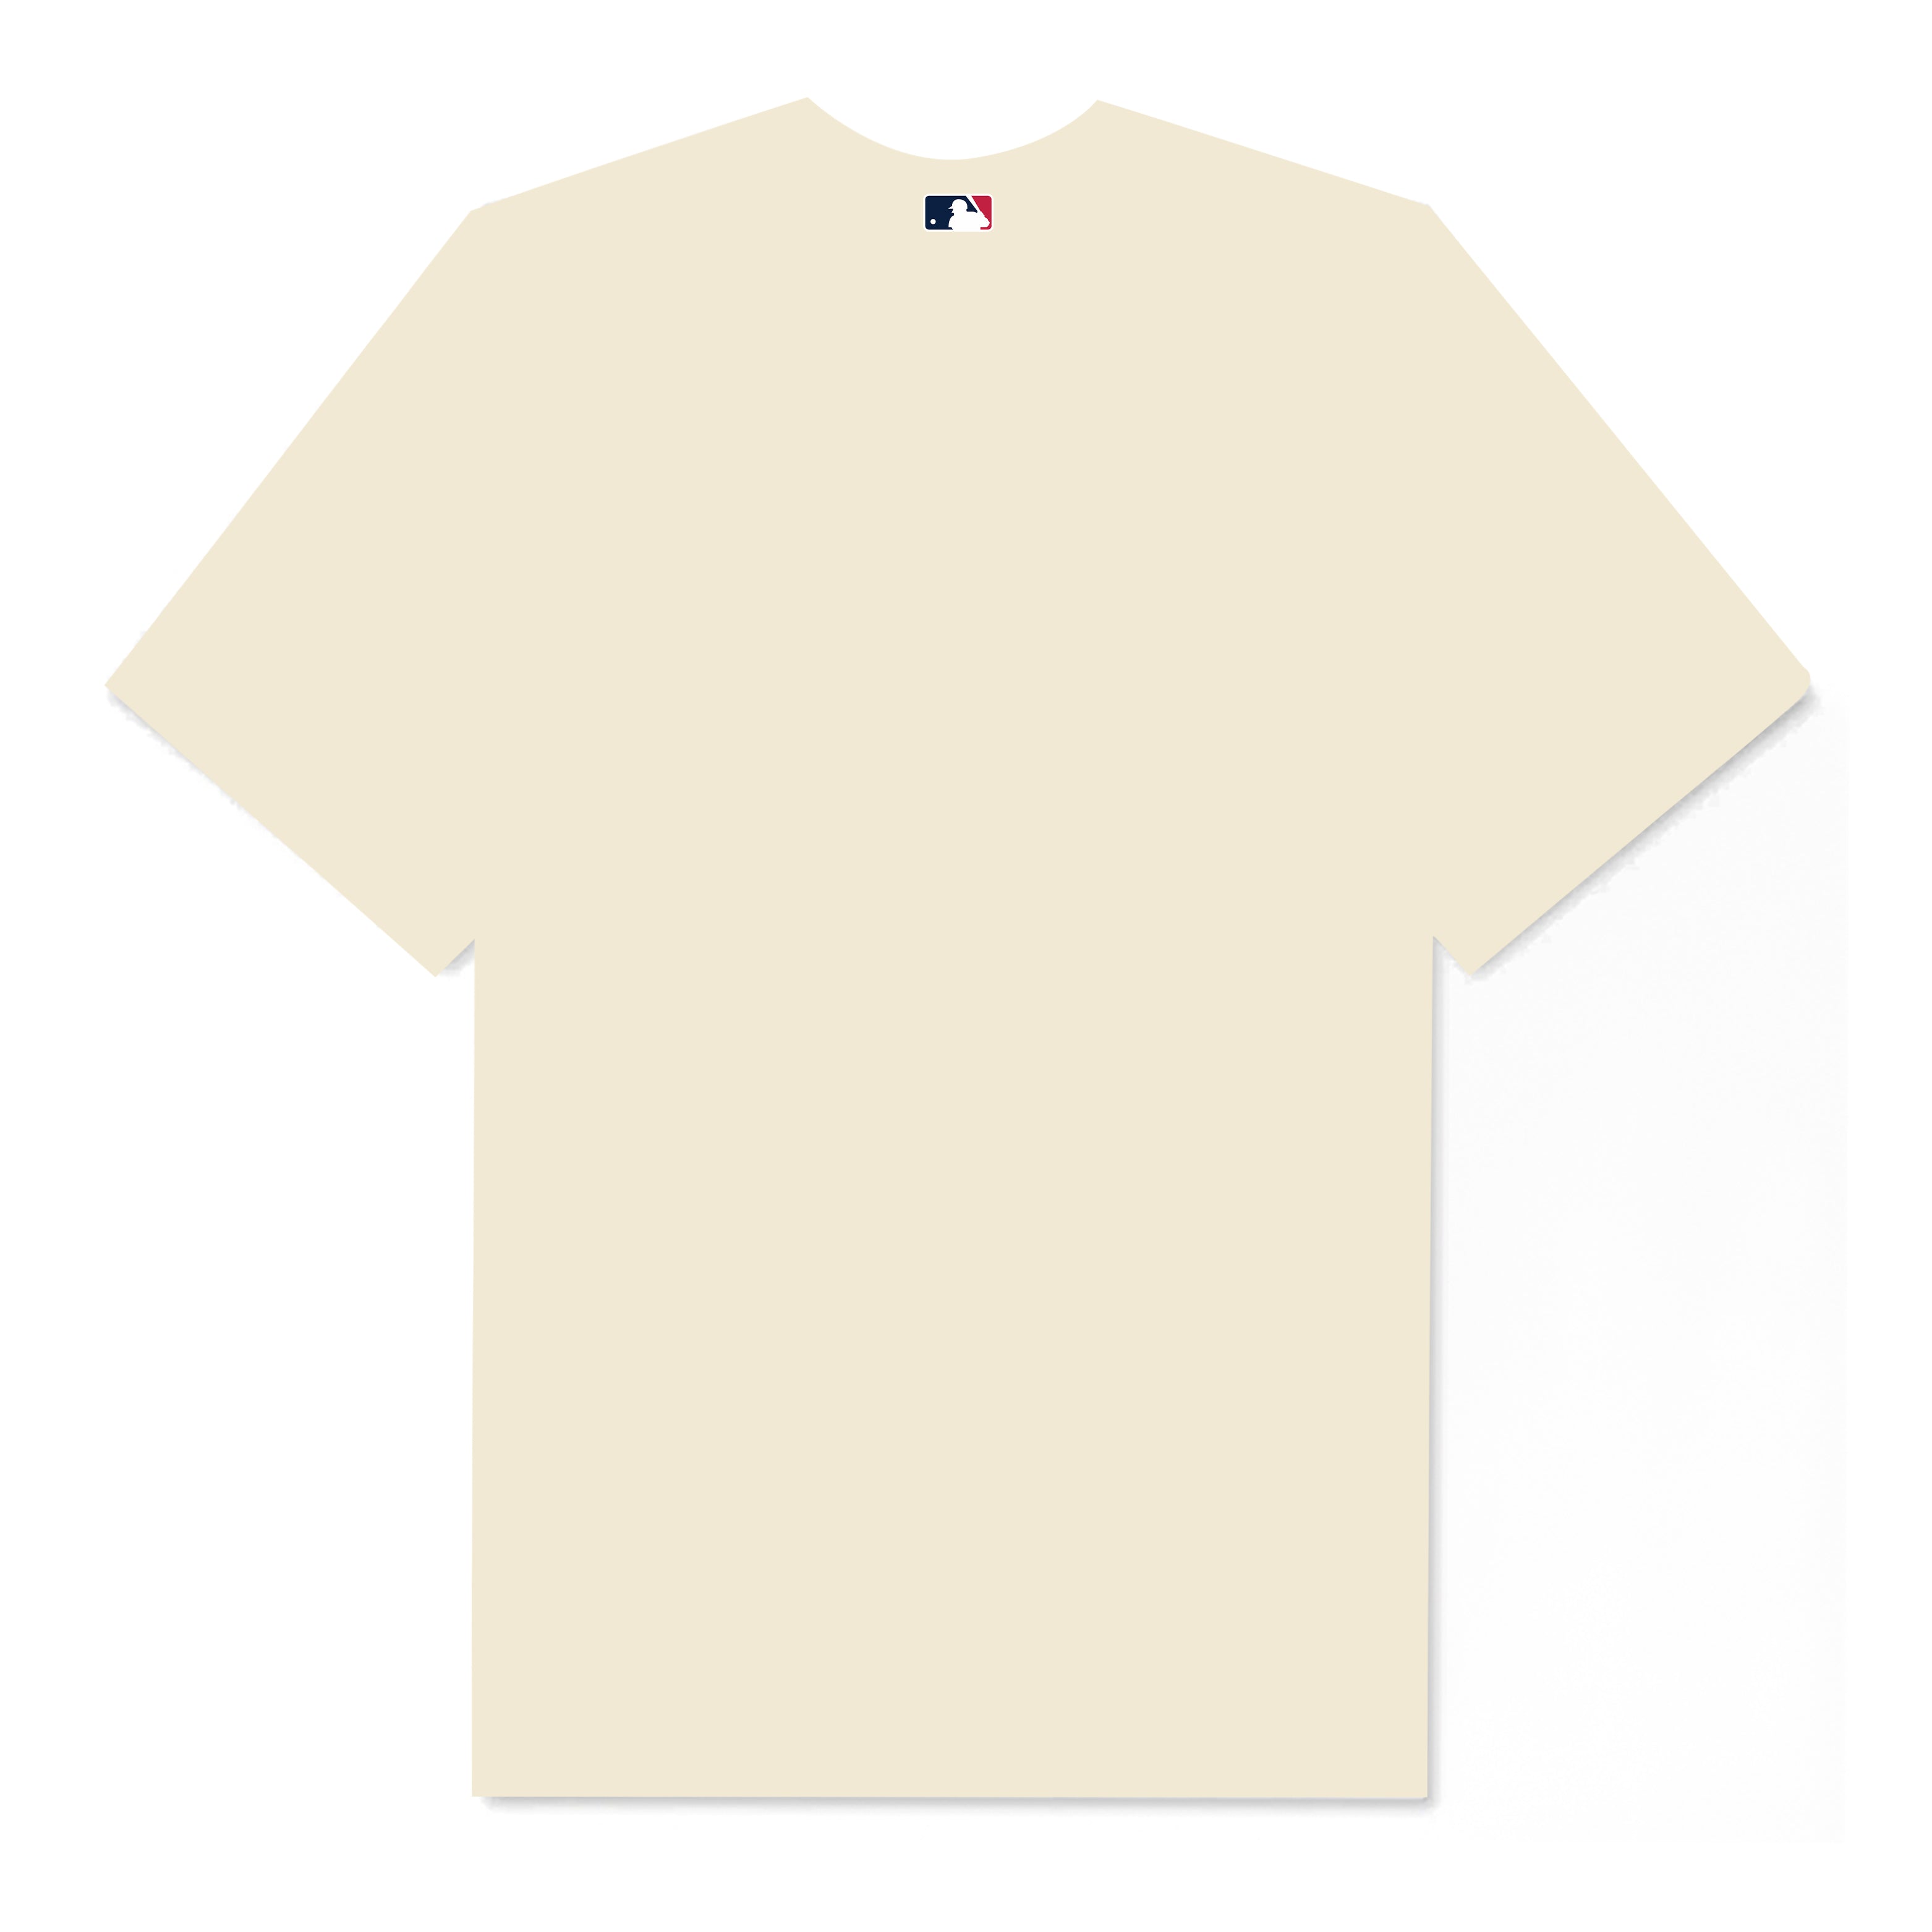 MLB Tom and Jerry New York Yankees T-Shirt